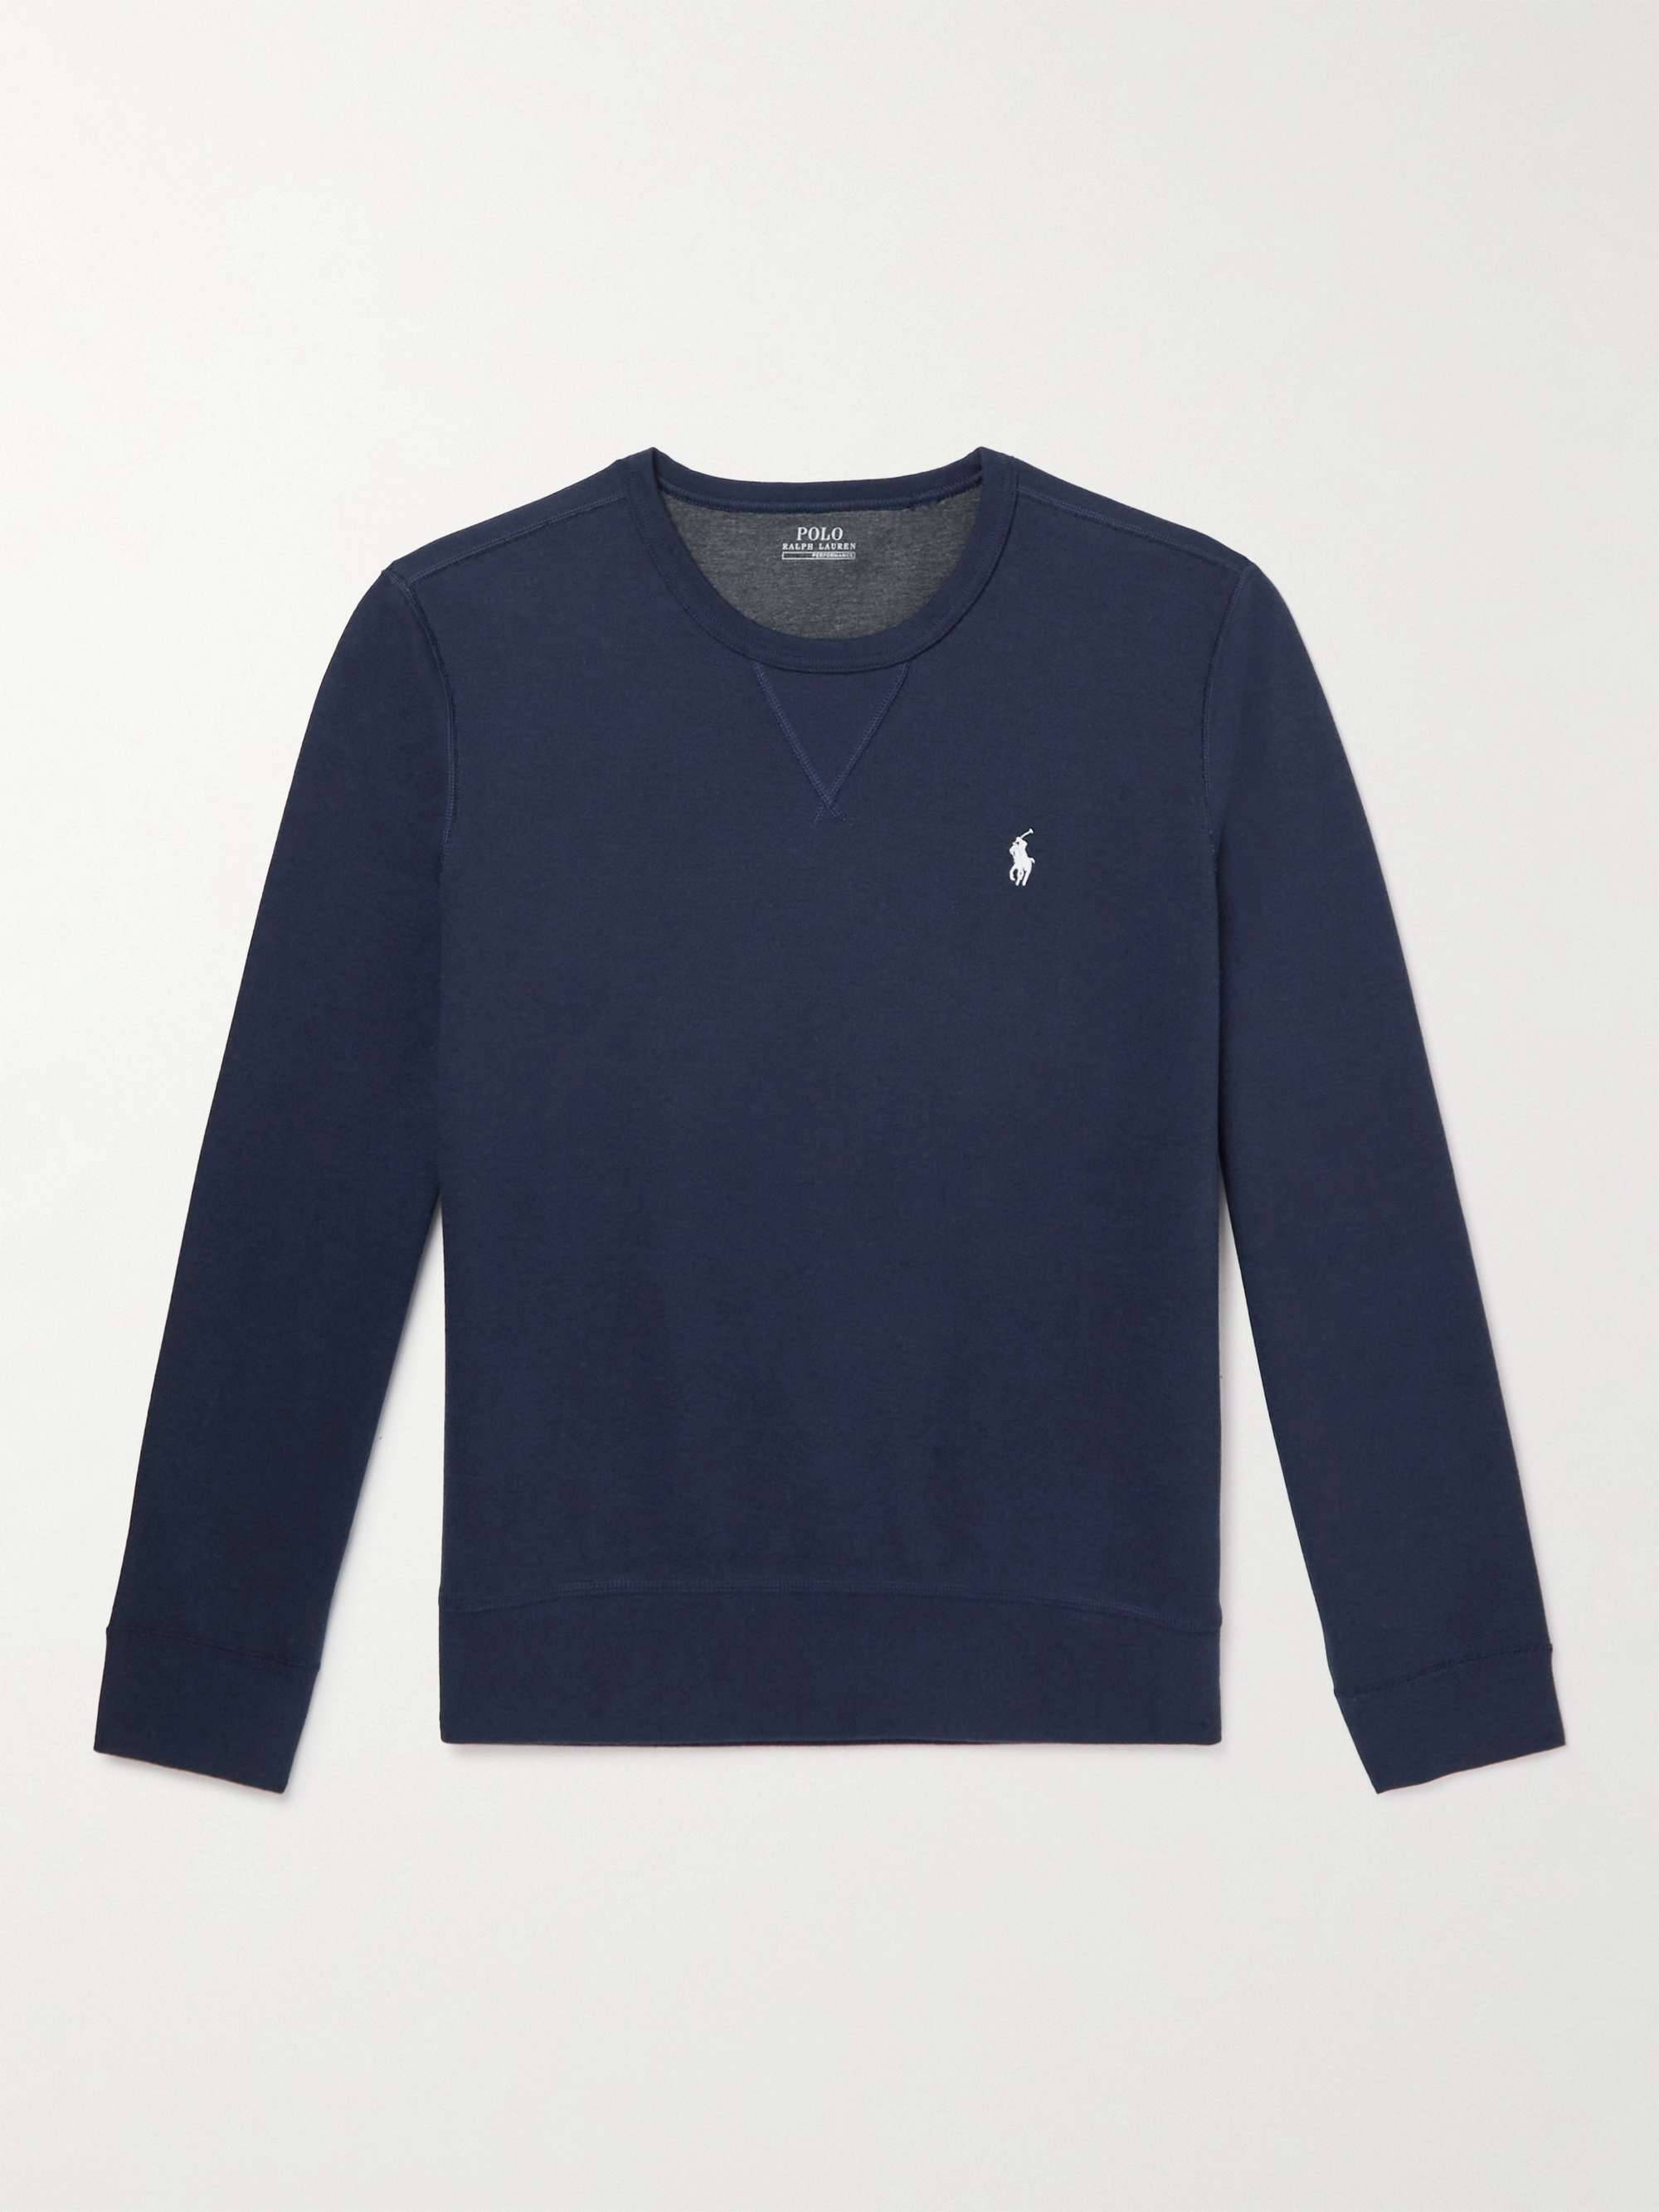 POLO RALPH LAUREN Logo-Embroidered Jersey Sweatshirt | MR PORTER